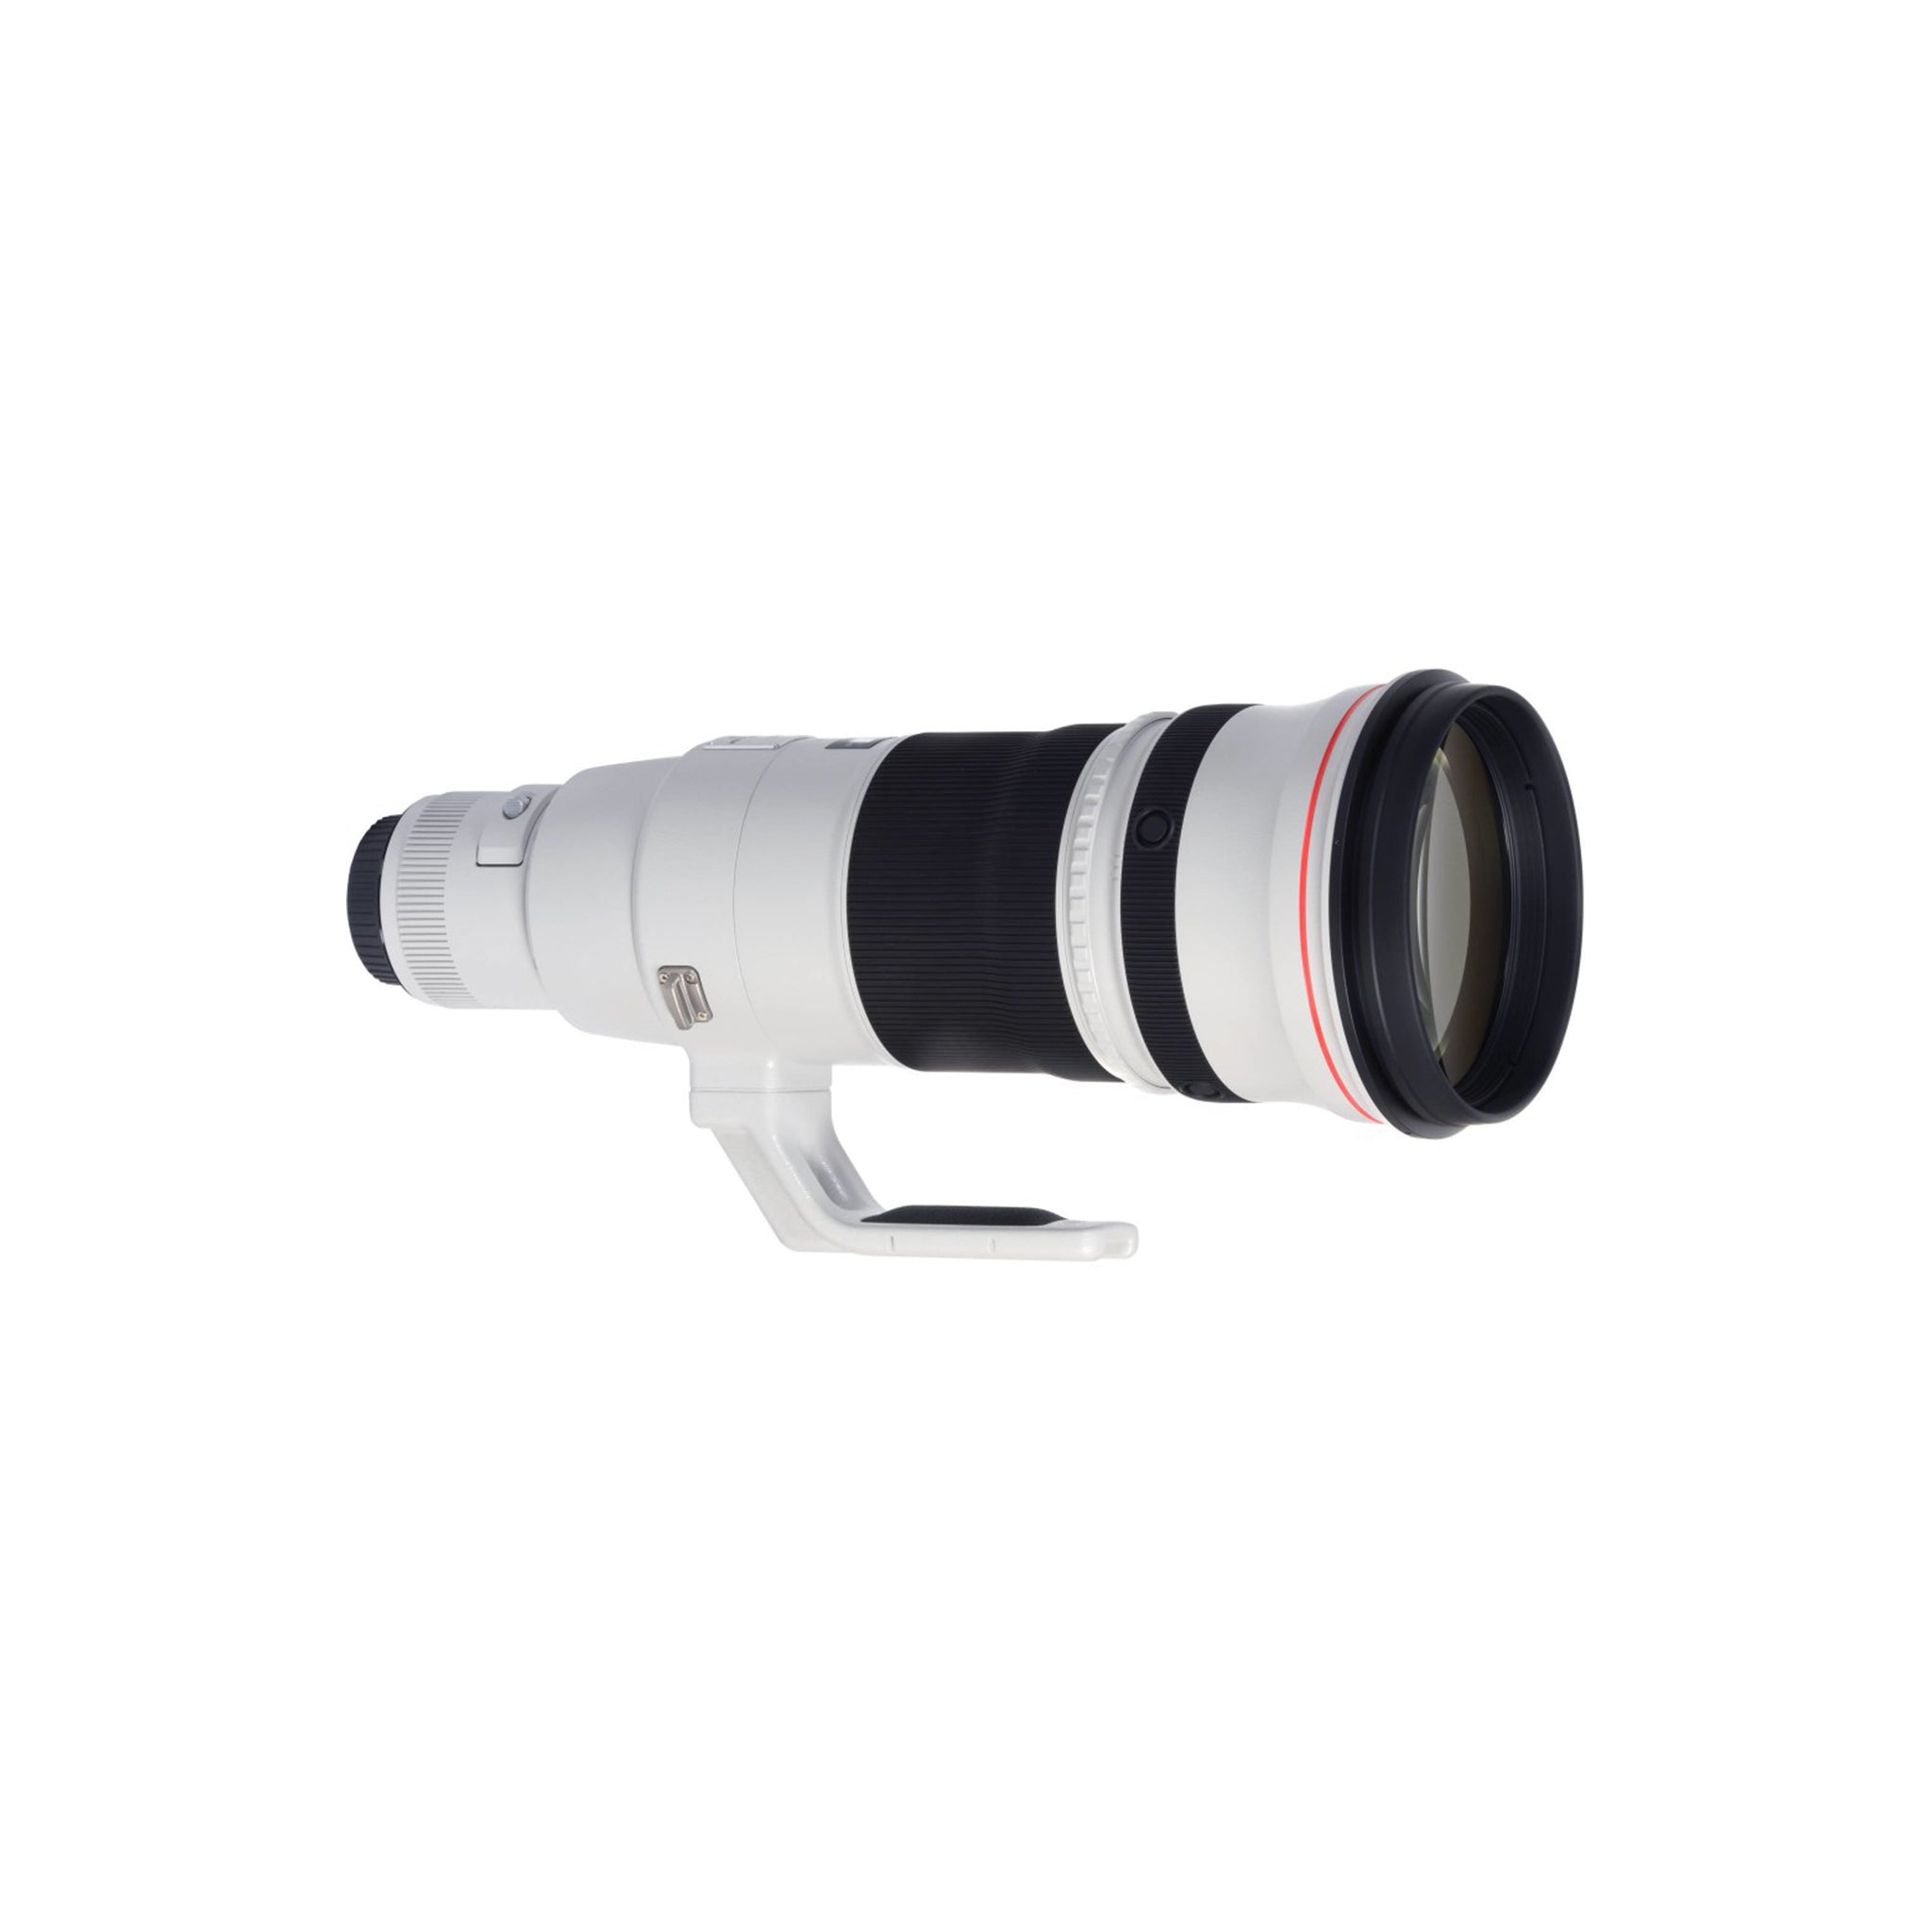 Canon EF 500m F4L IS II USM Lens